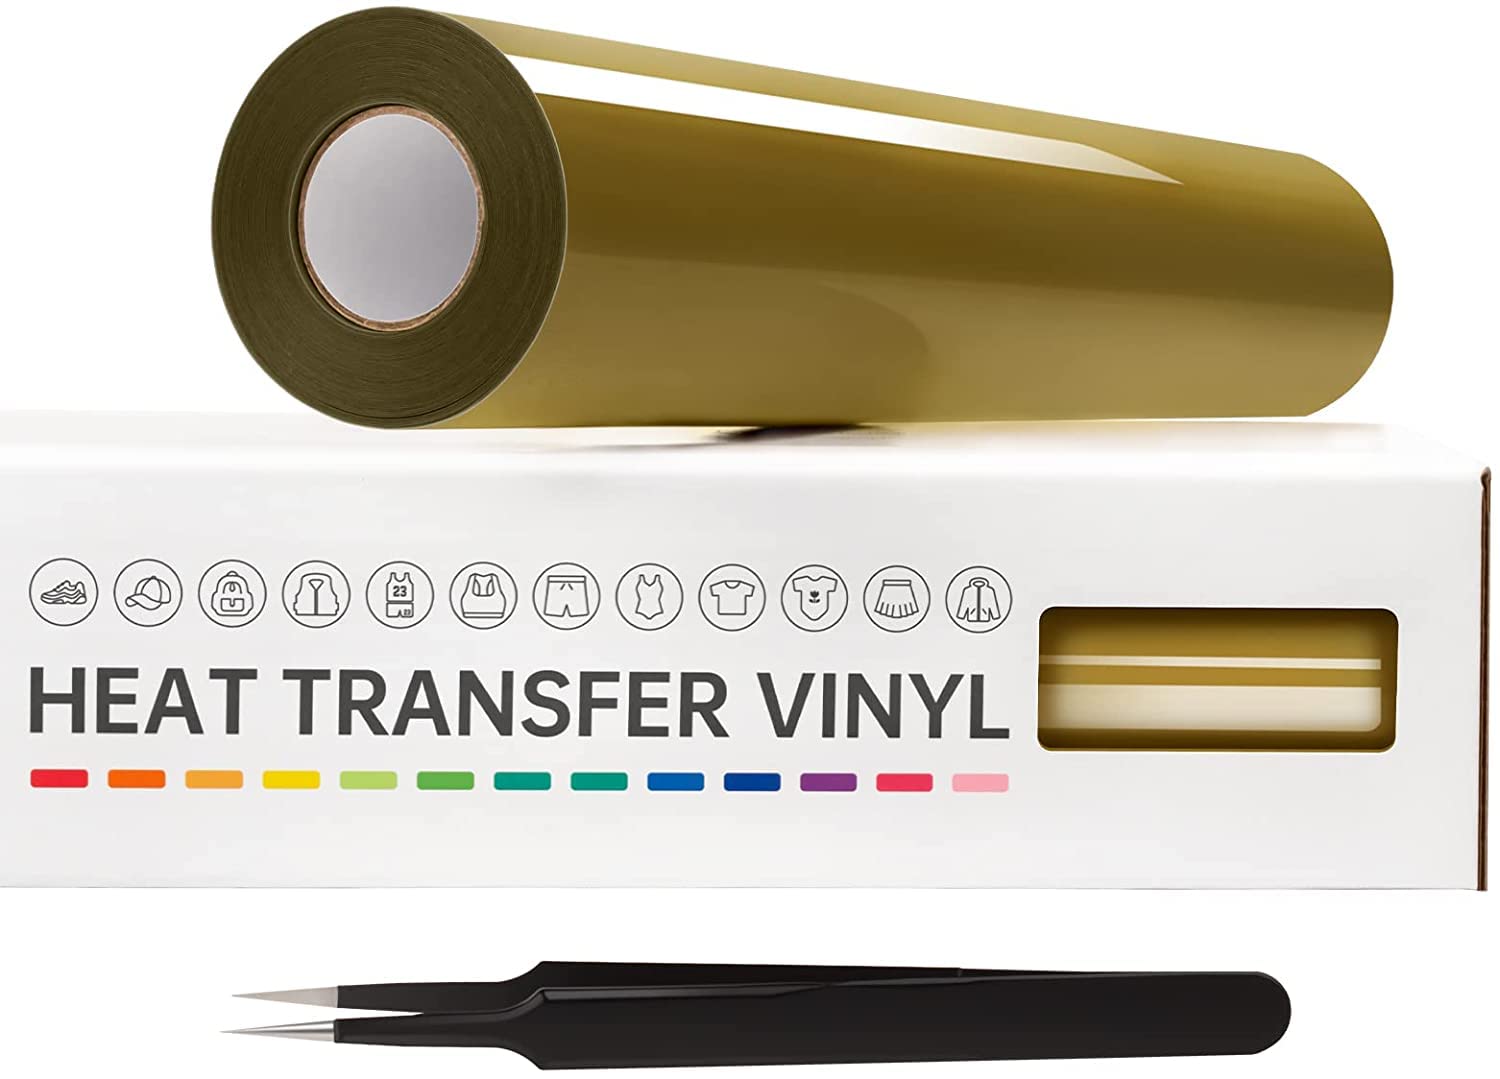 VinylRus Vinylrus Heat Transfer Vinyl-12A X 25Ft Gold Iron On Vinyl Roll  For Shirts, Htv Vinyl For Silhouette Cameo, Cricut, Easy To Cut